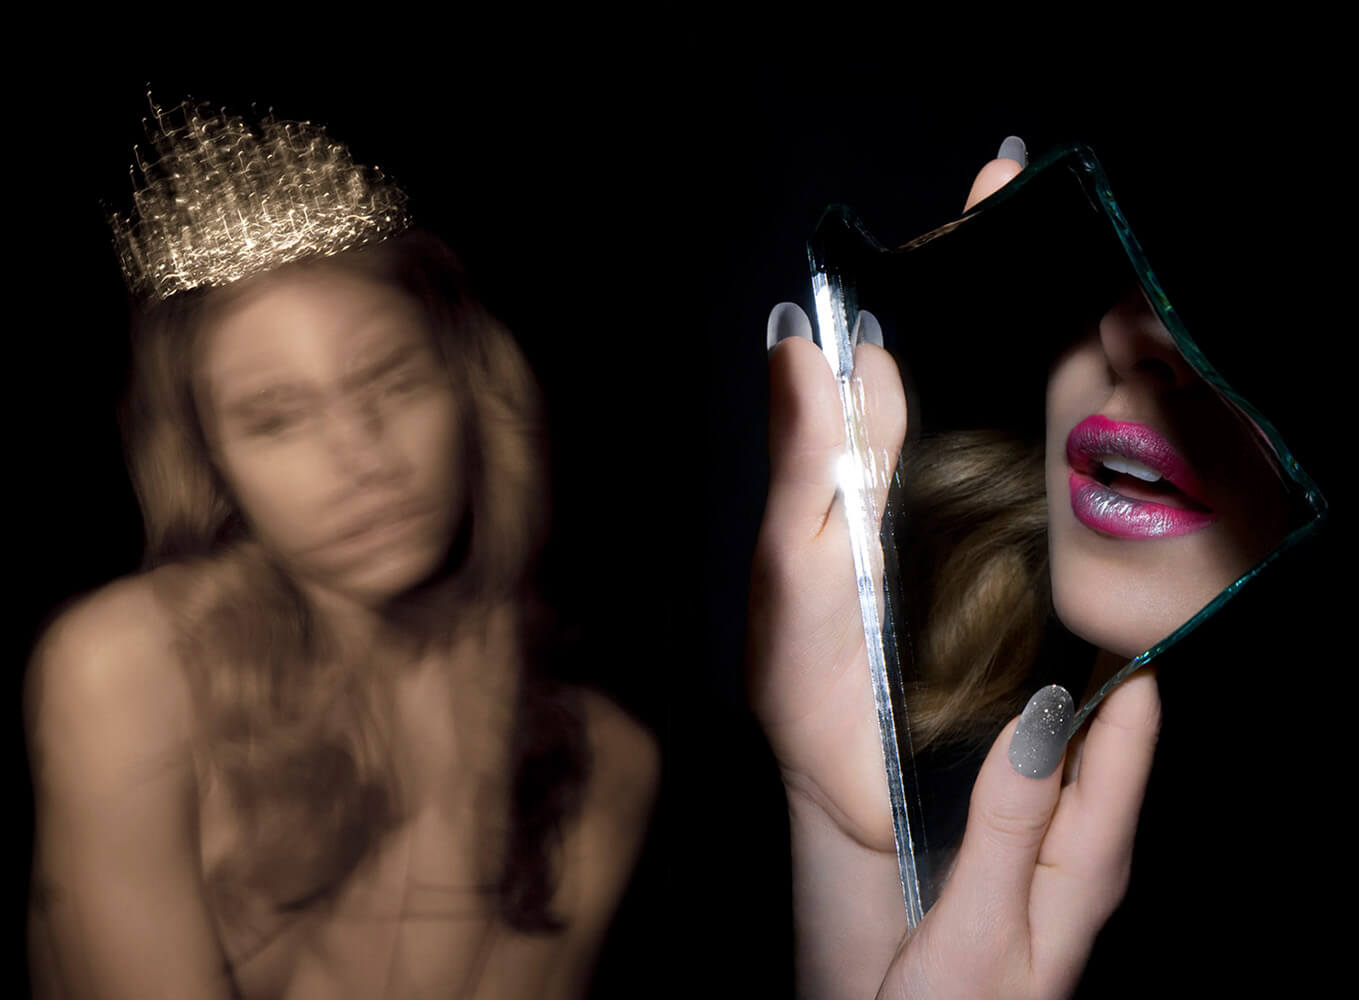 Angel-Ruiz-Ruiz-editorial-Beauty-mirror-mirror-Magazine-avenue-illustrated-queen-fuchsia-lips-hand-1359x1000